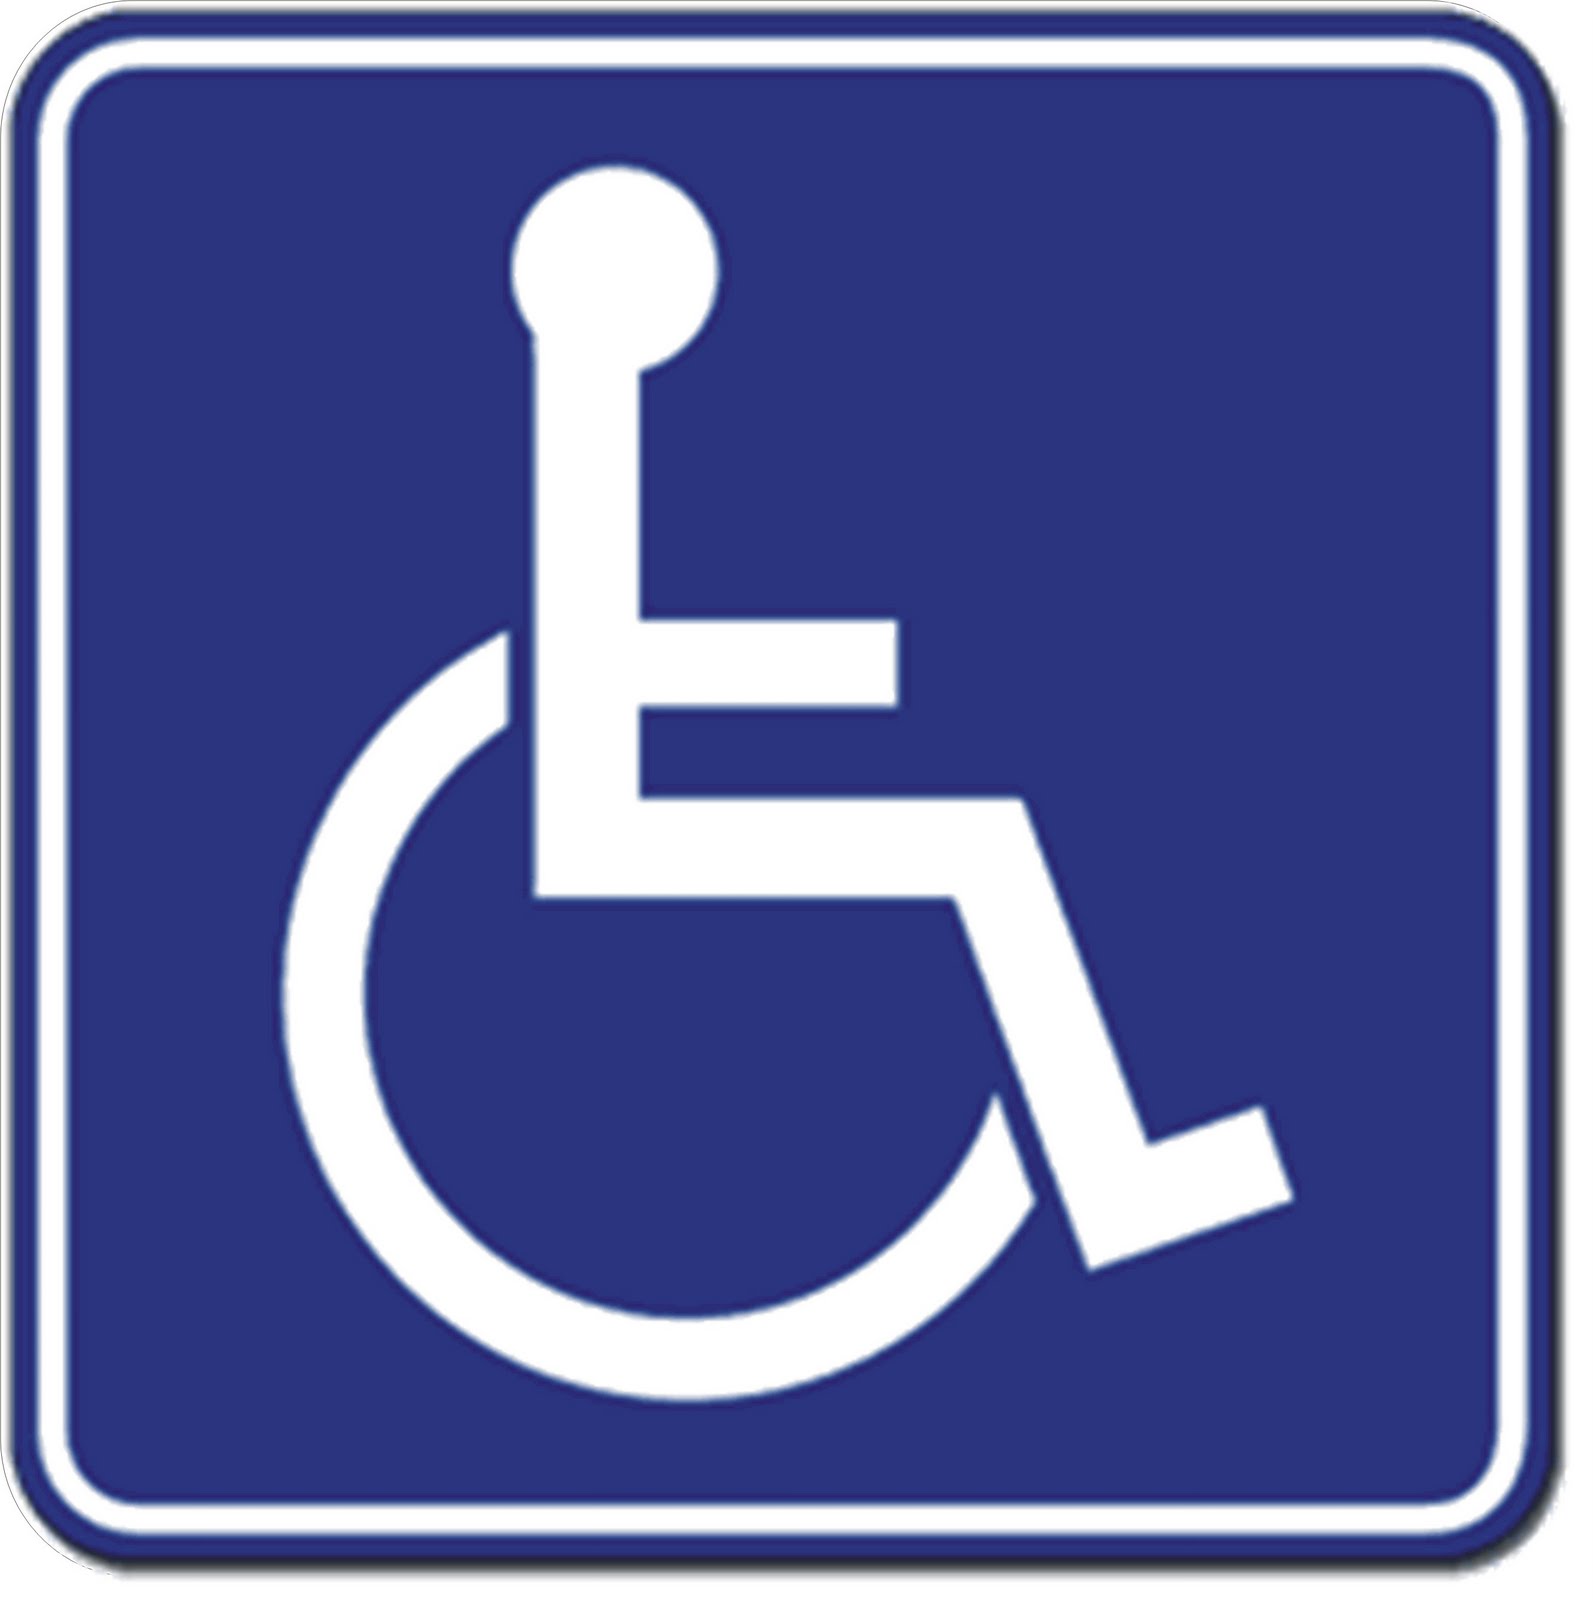 Permanent aluminum wheelchair ramps walmart, wheelchair symbol meaning ...